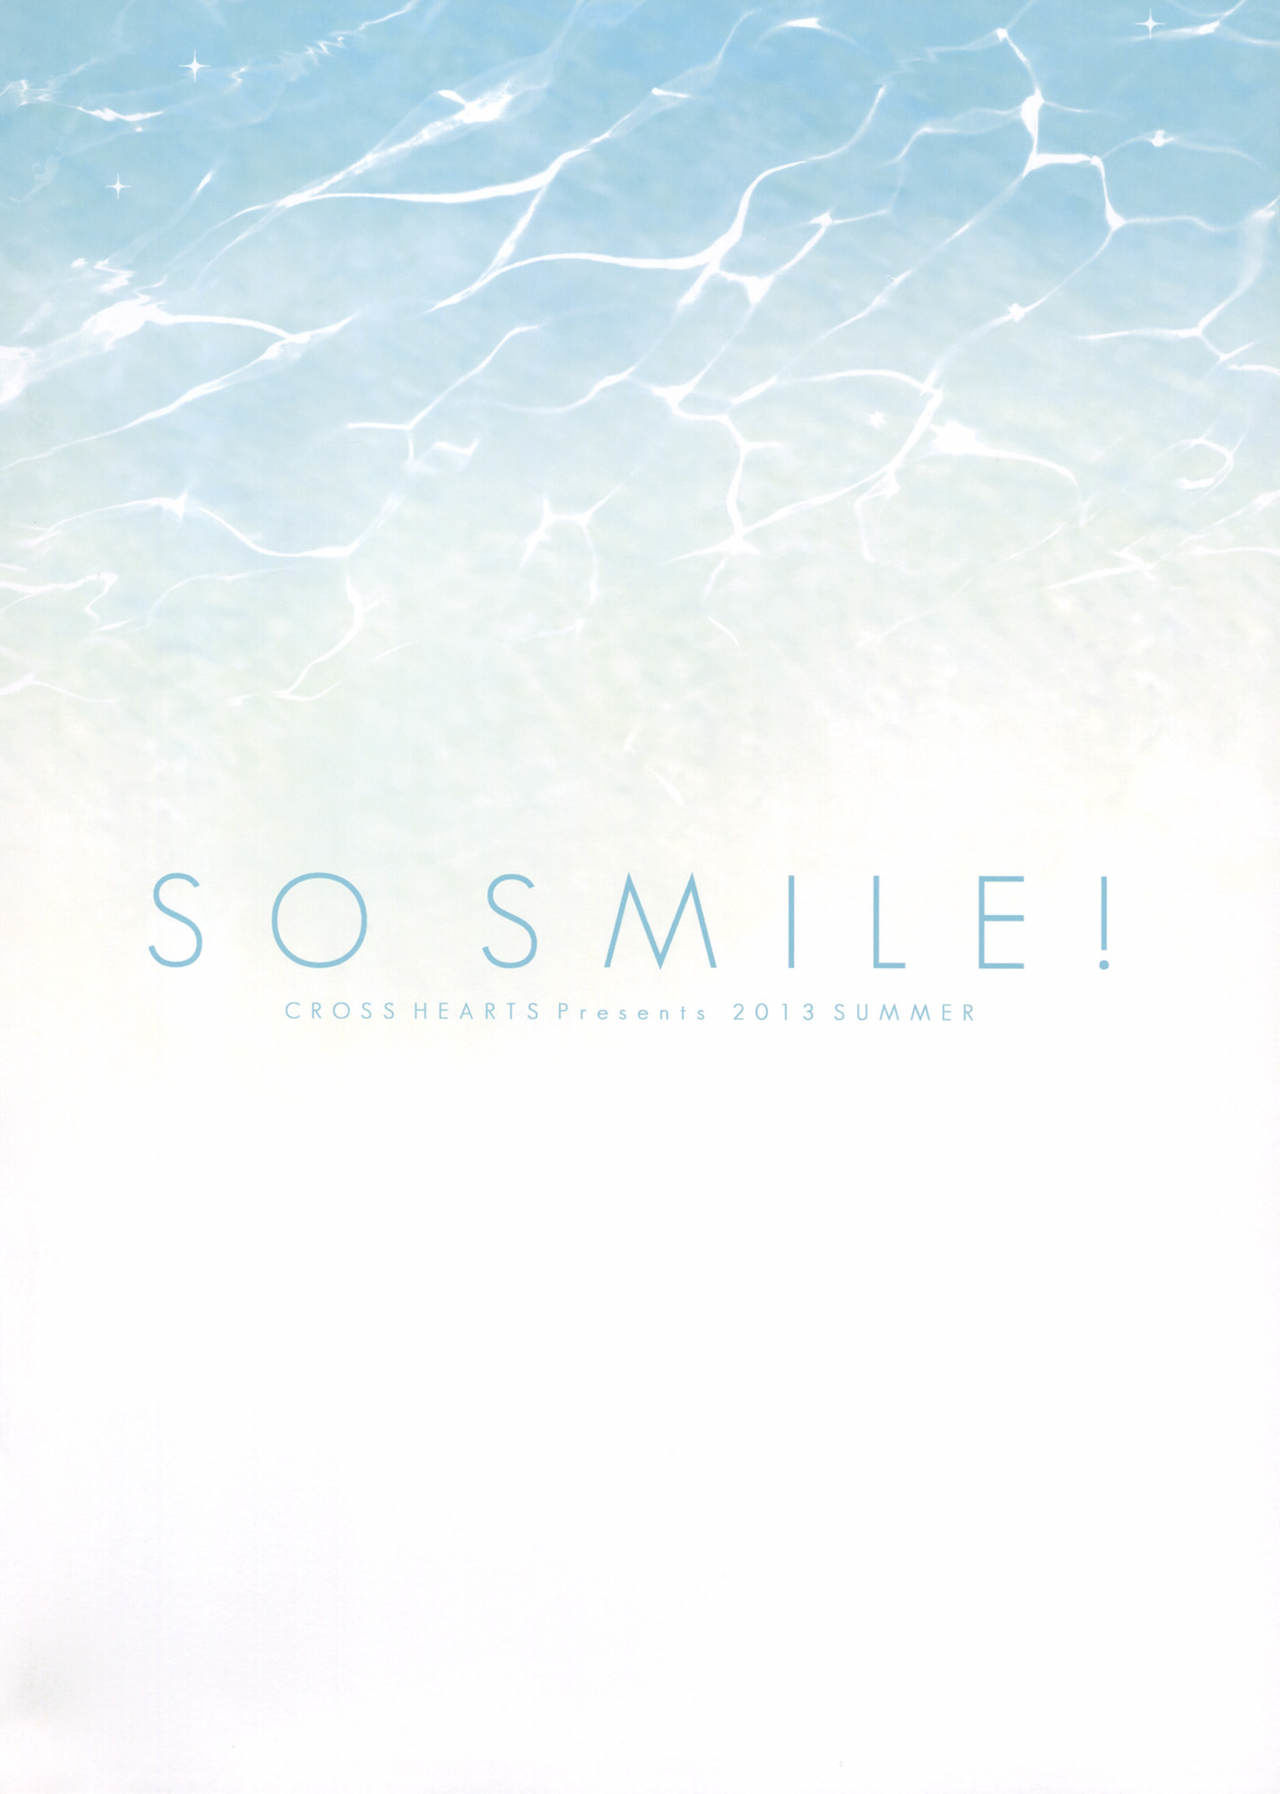 [cross trái tim (ayase hazuki)] Rất smile! (super sonico) [2013 09 01] [smdc]